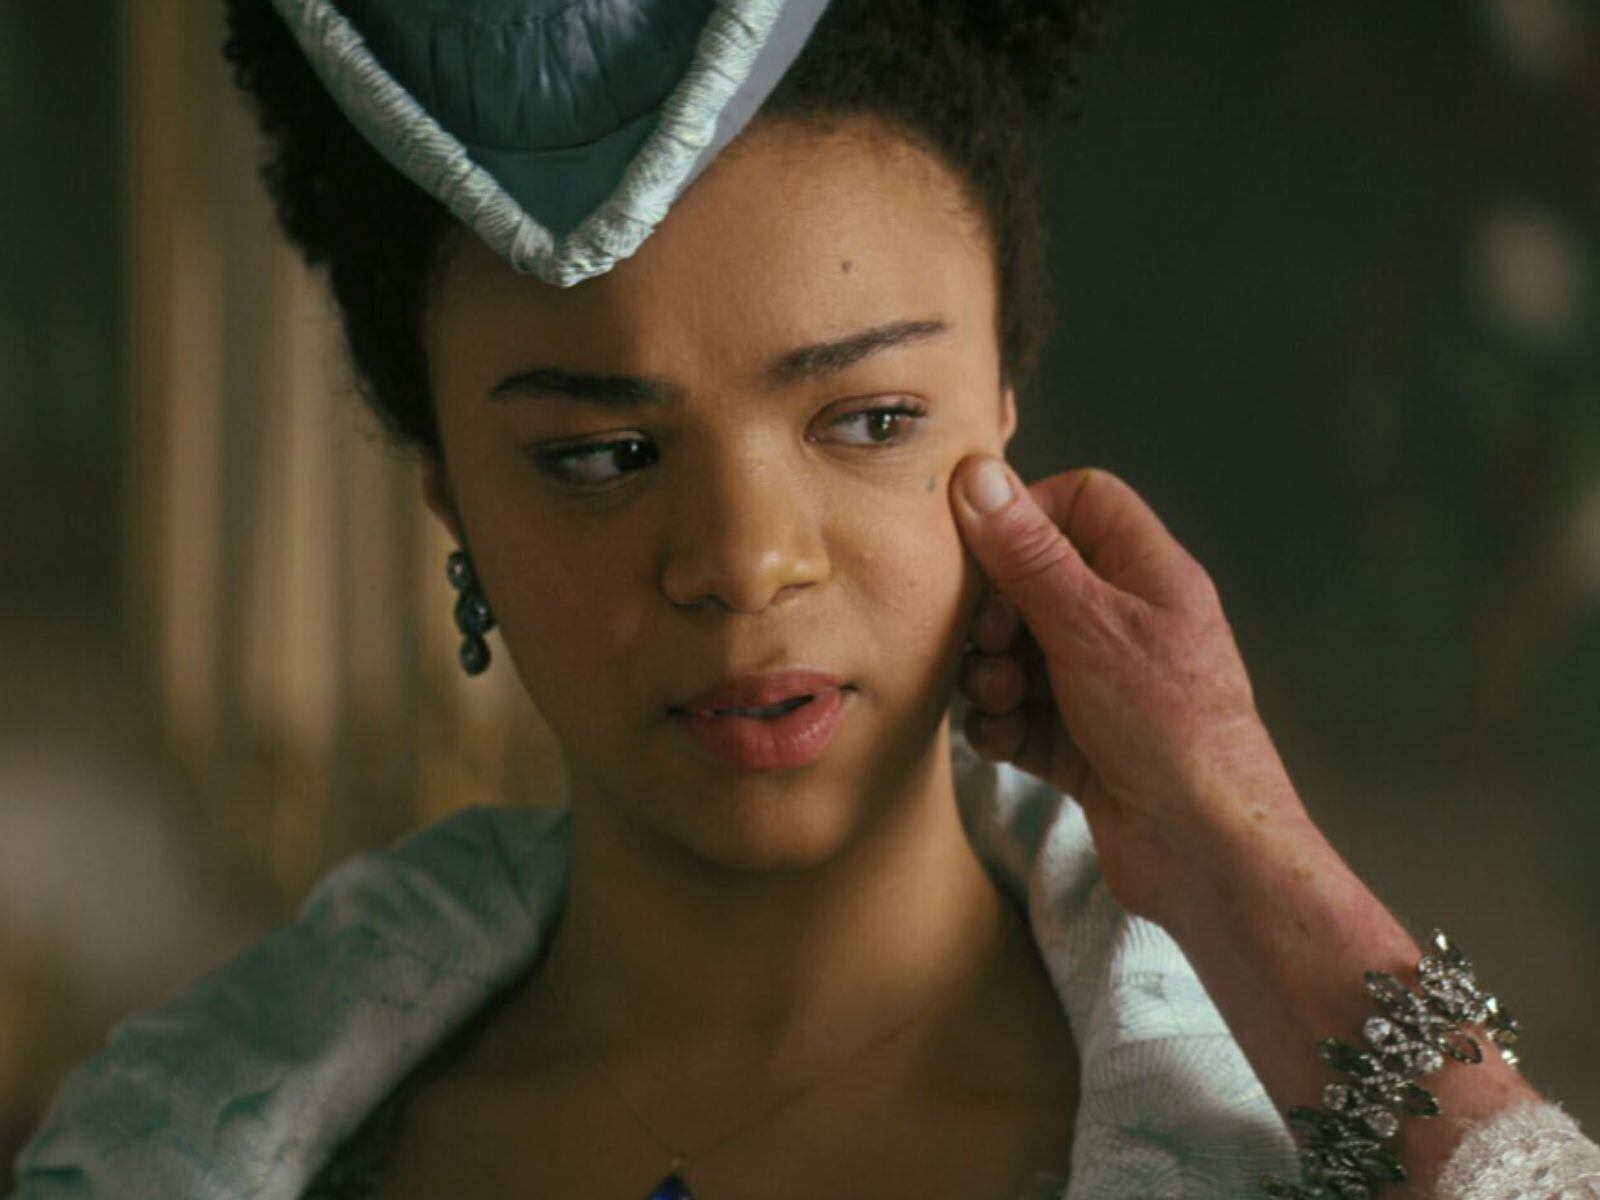 India Amarteifio  en una escena de la serie “La reina Charlotte: Una historia de Bridgerton” (Foto: Netflix)